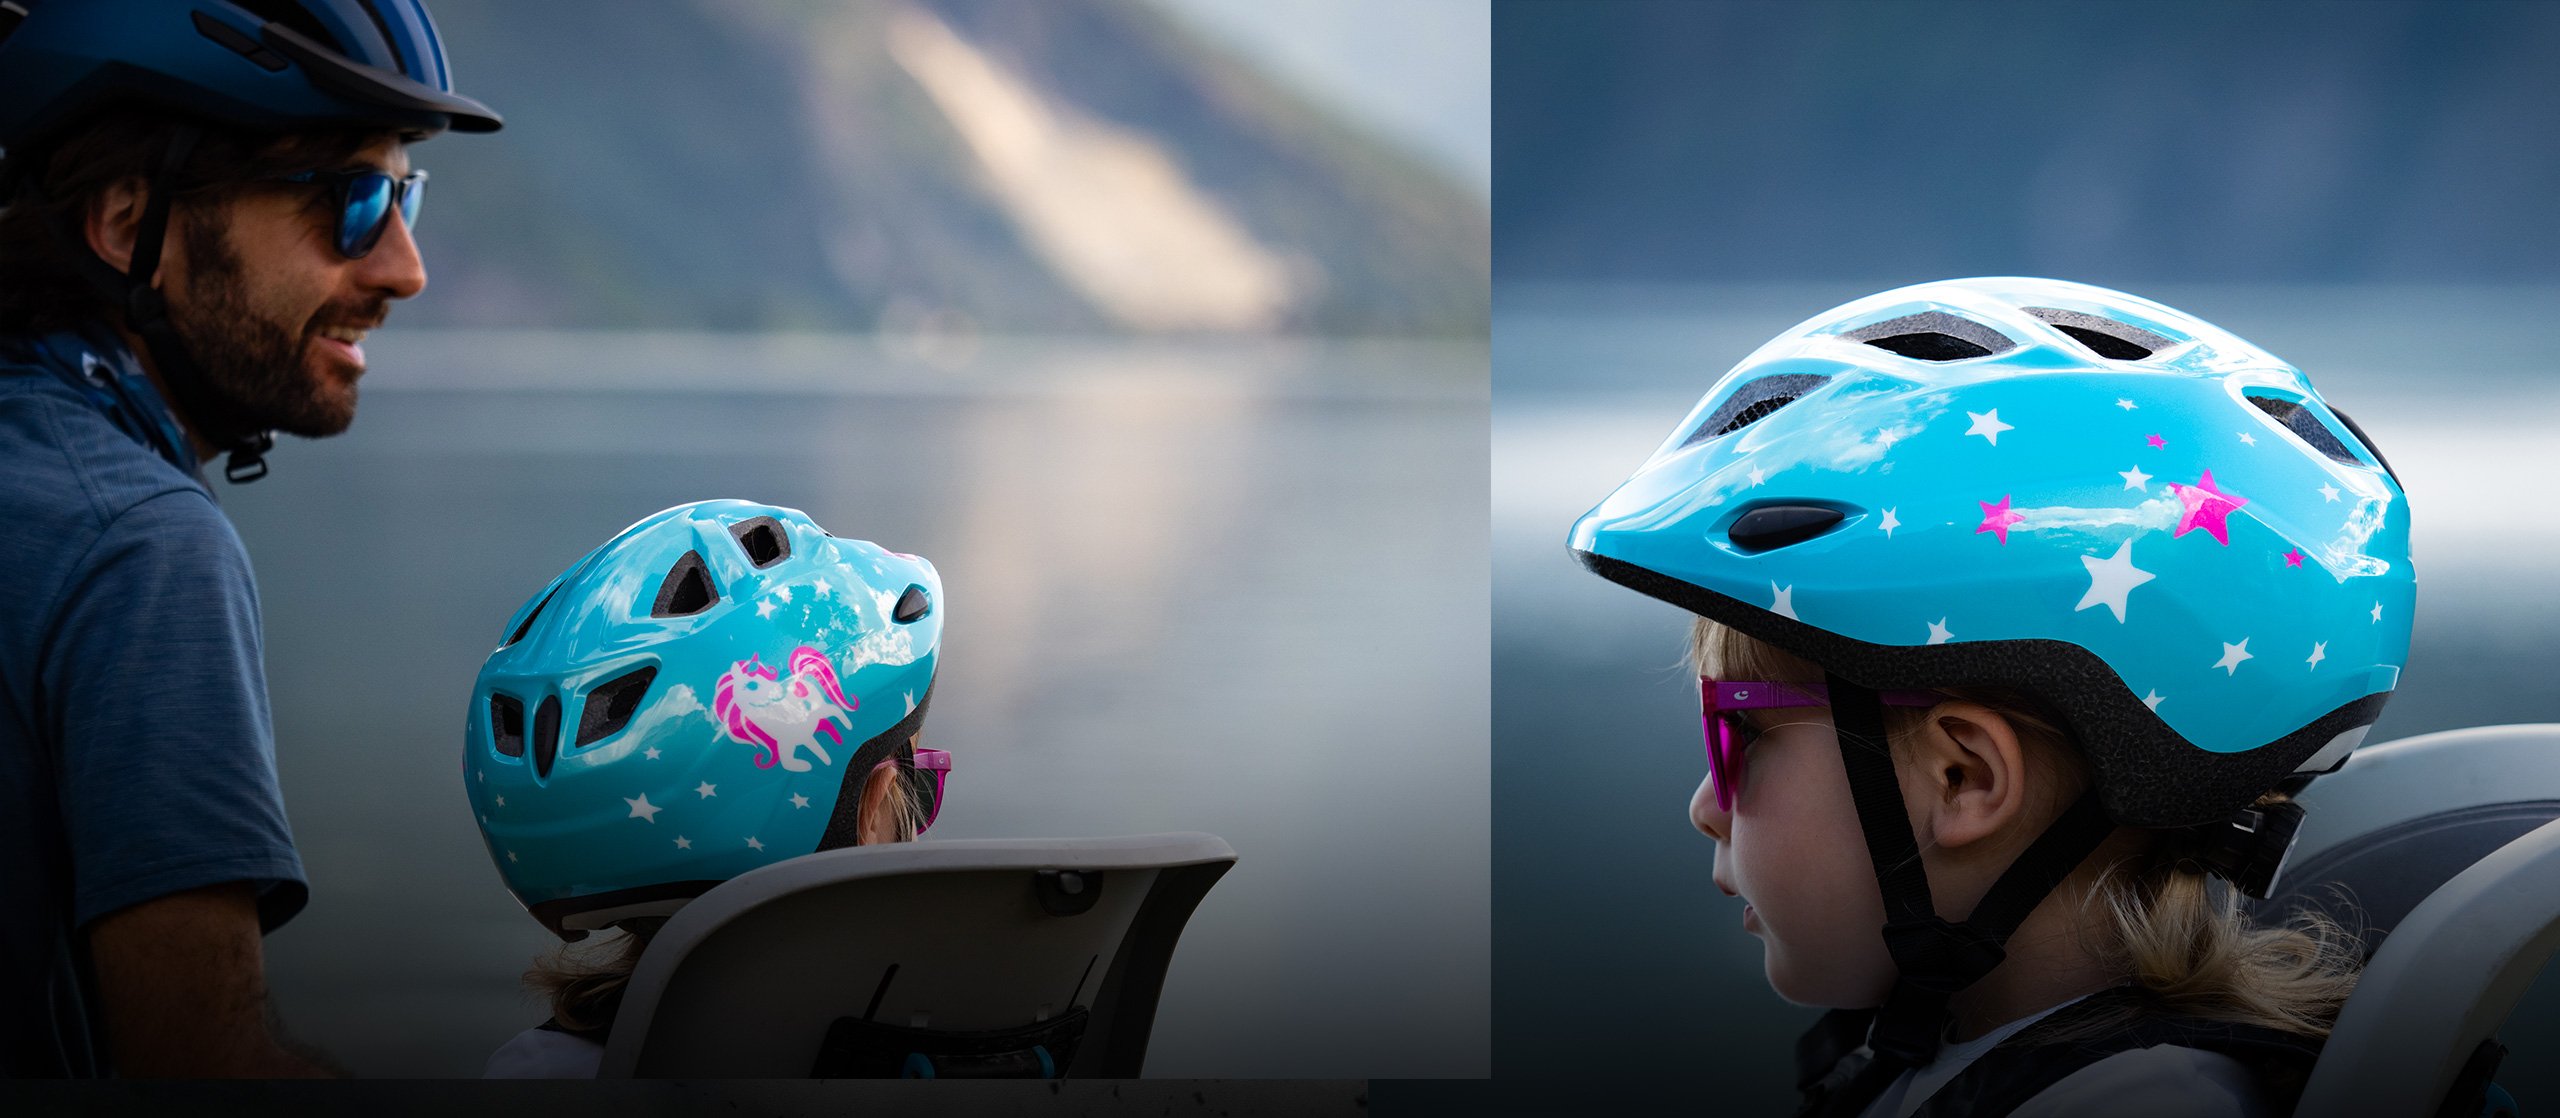 MET Helmets Specialists in kids bike helmets